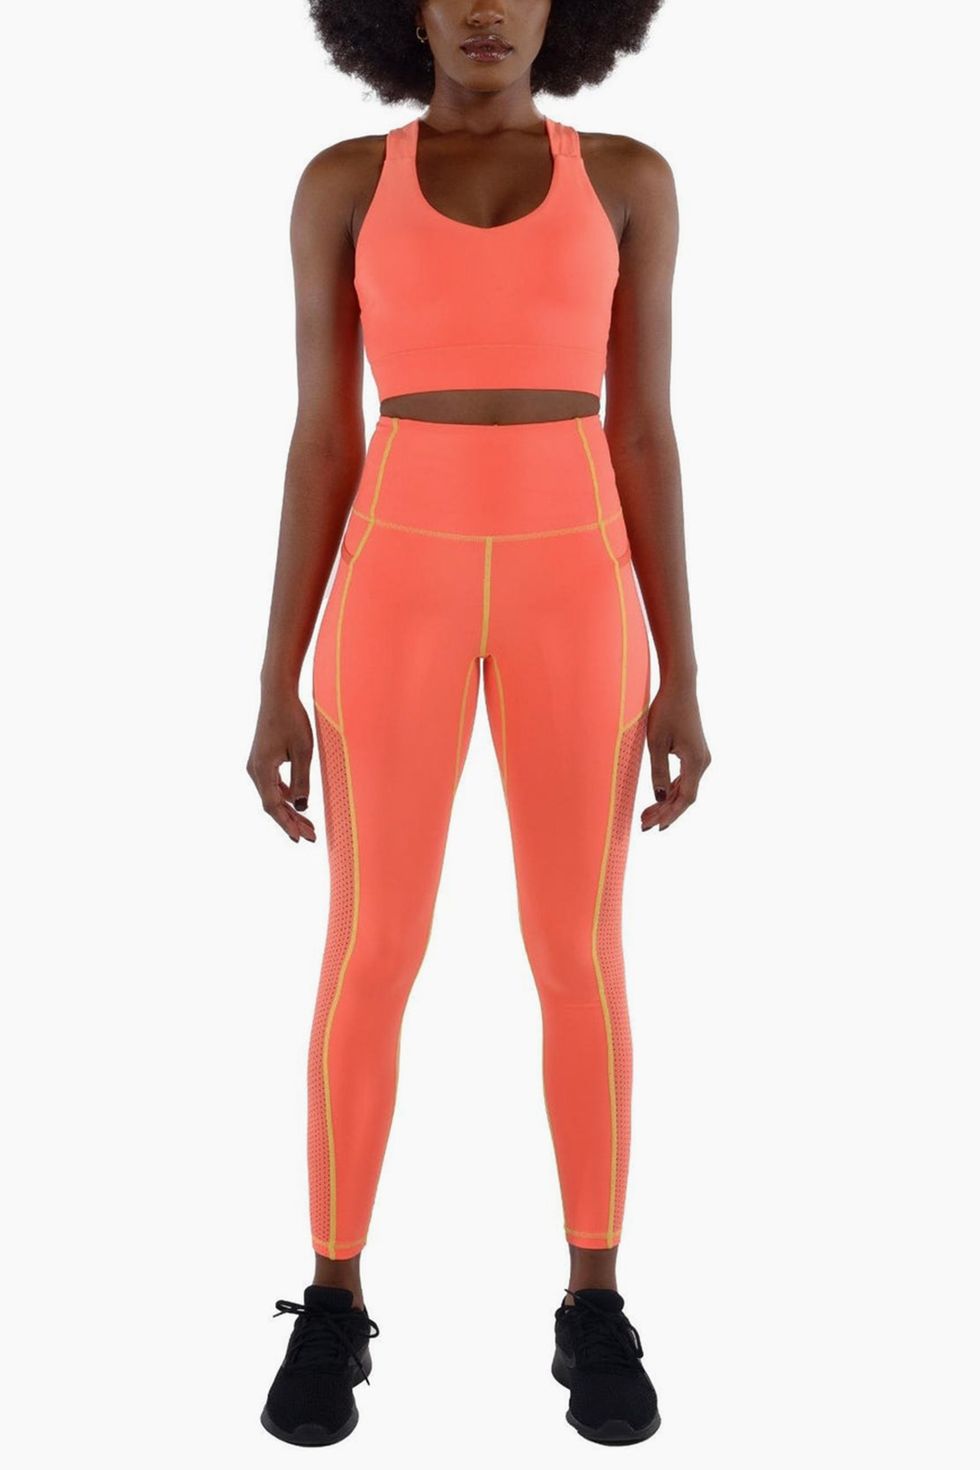 Aerie Rust Orange Laser Cut Pocket Leggings Yoga Pants Size Large 